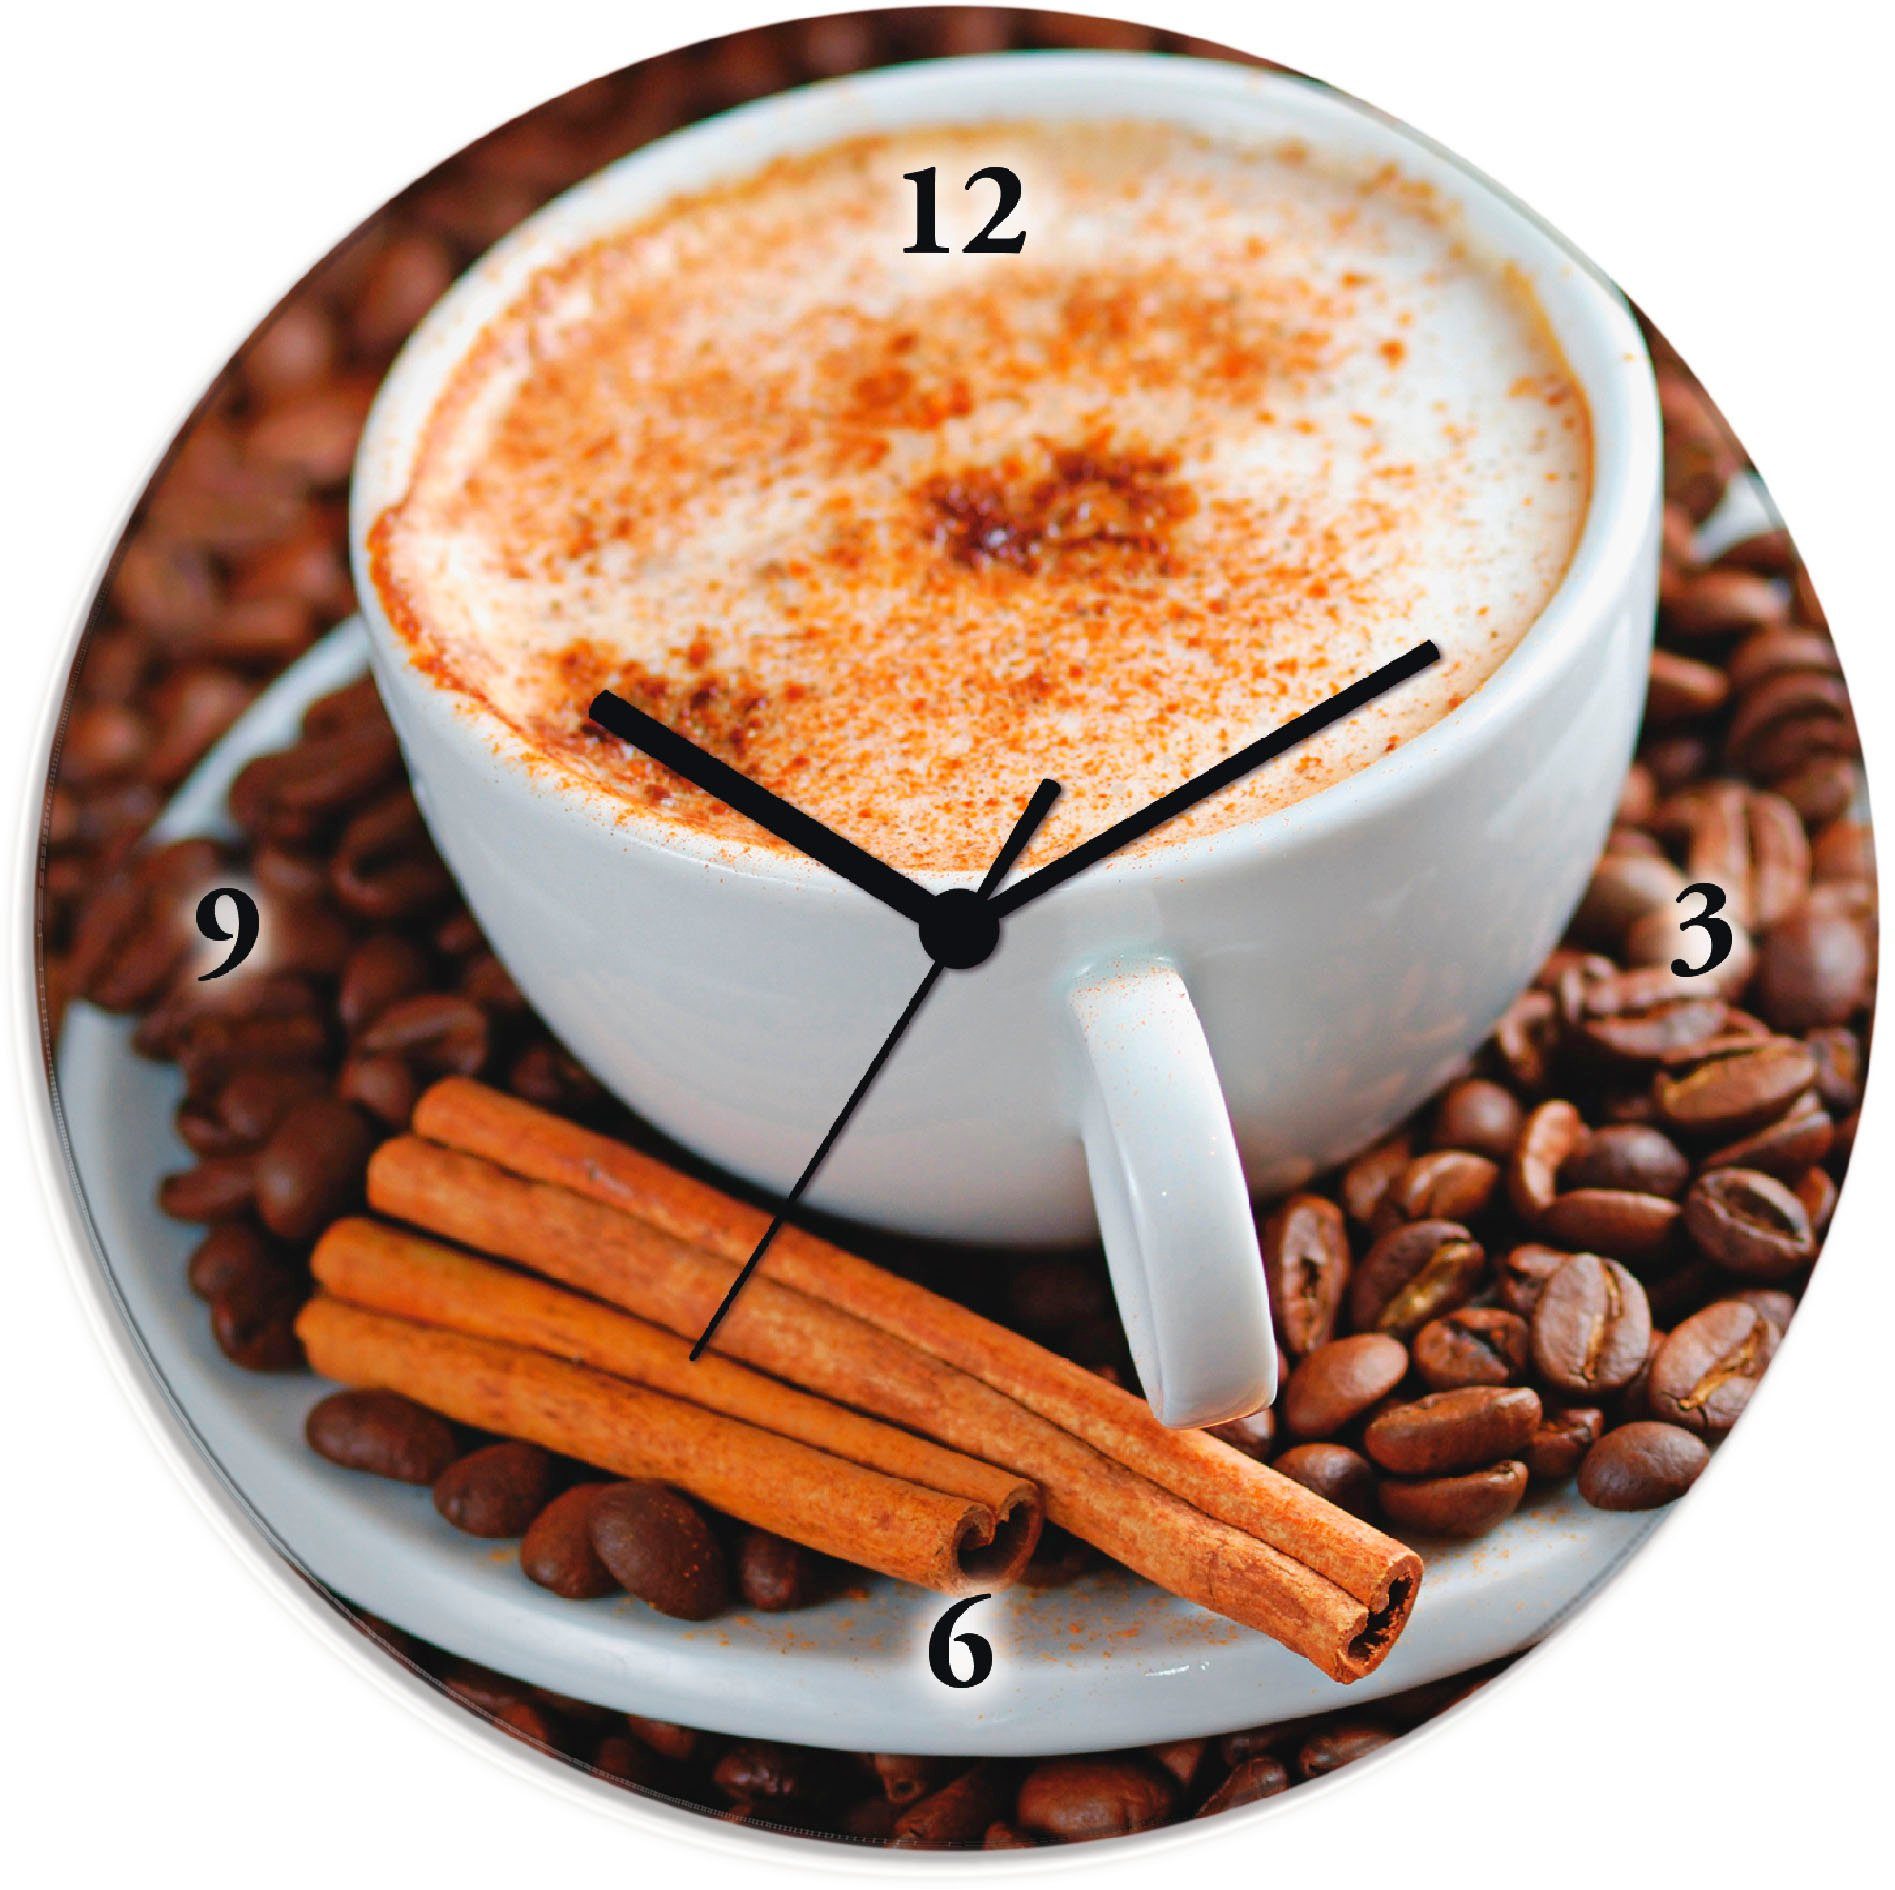 Artland Wanduhr Cappuccino - Kaffee (wahlweise mit Quarz- oder Funkuhrwerk, lautlos ohne Tickgeräusche)